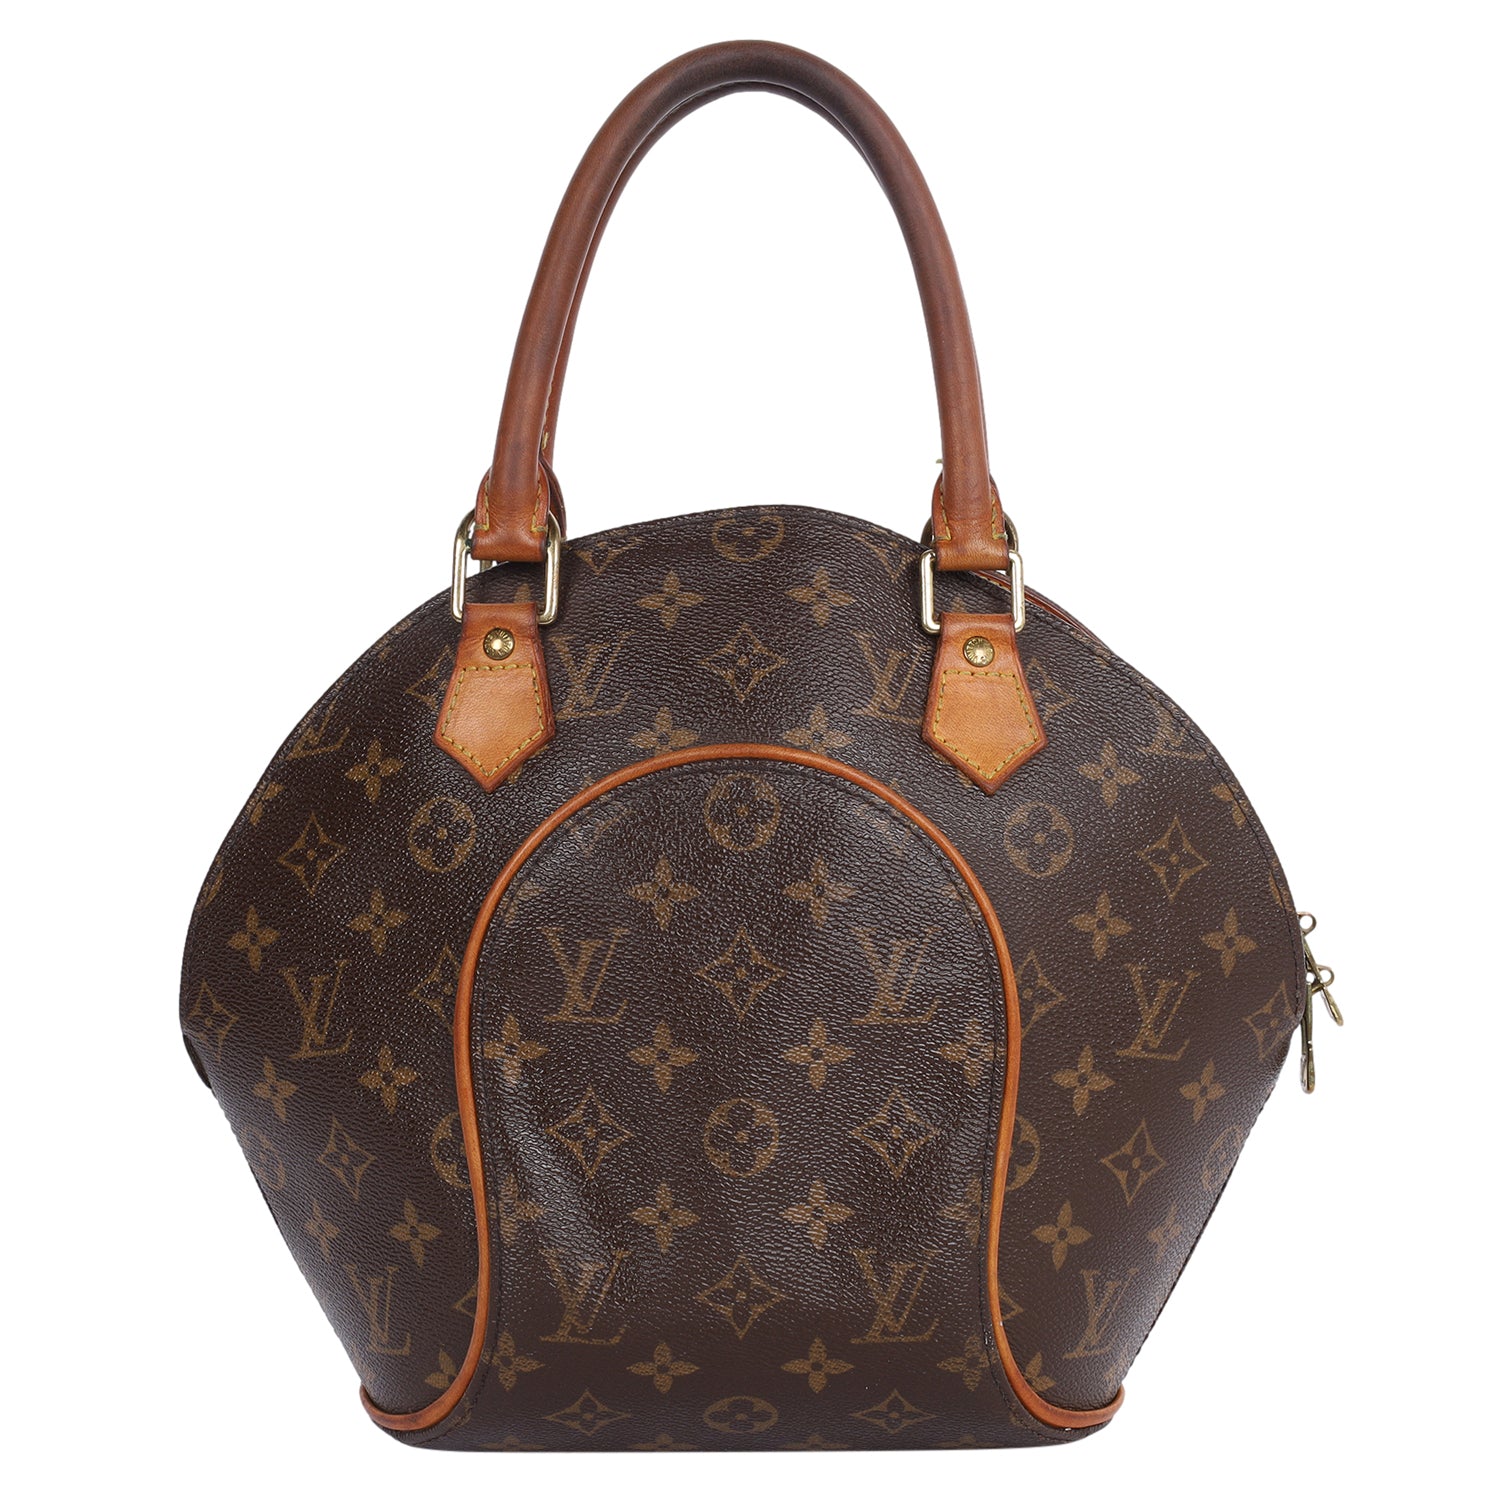 Authentic Louis Vuittons Handbag Pre Owned